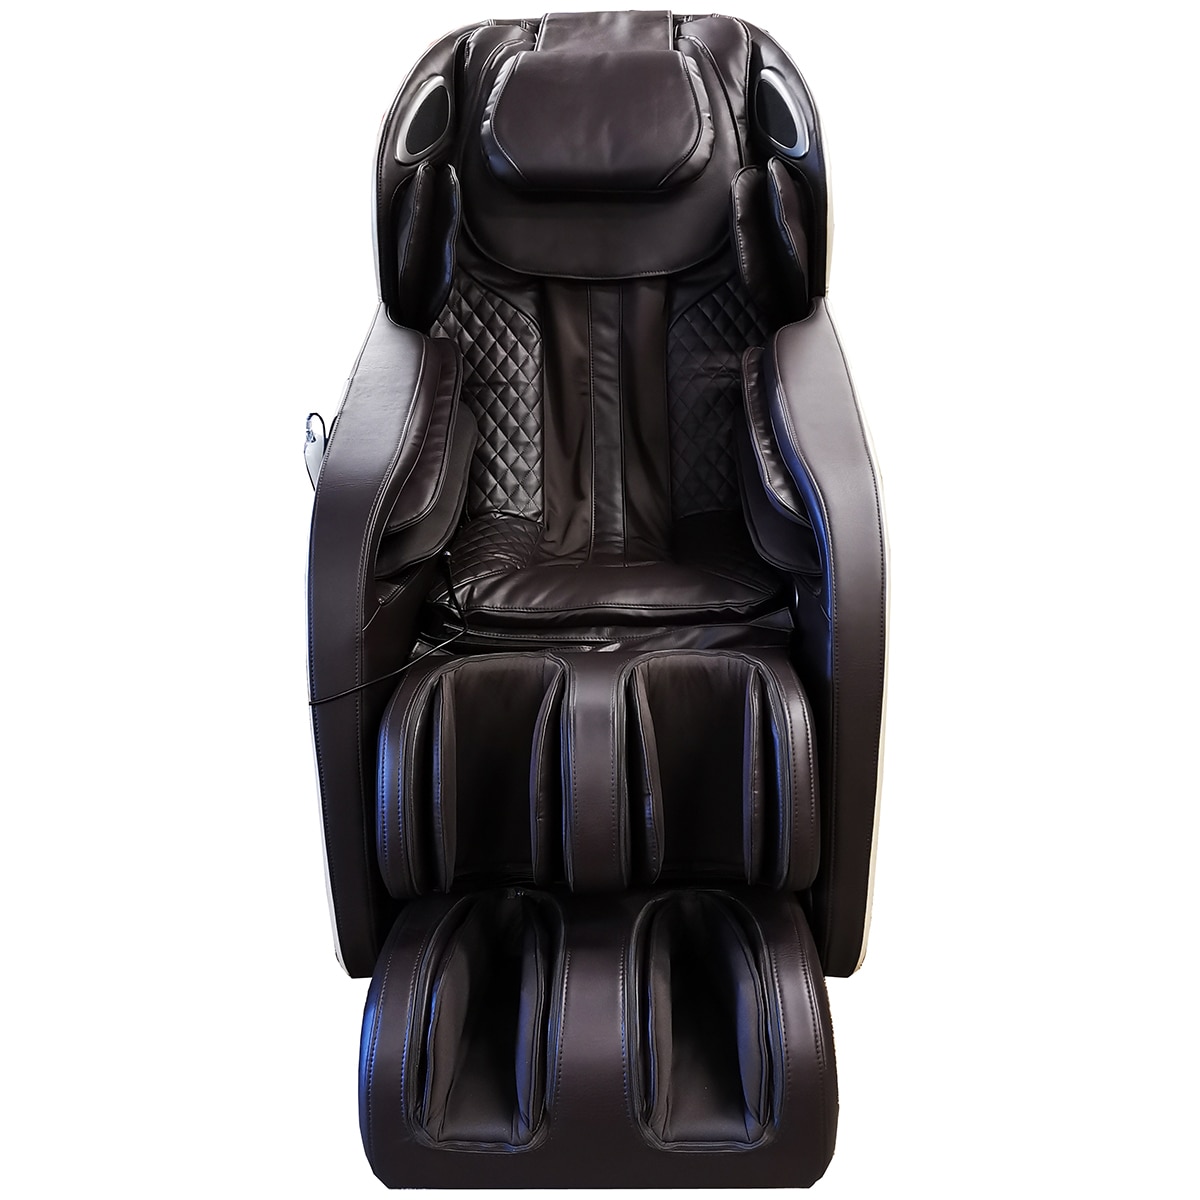 Iyume Massage Chair Costco Australia